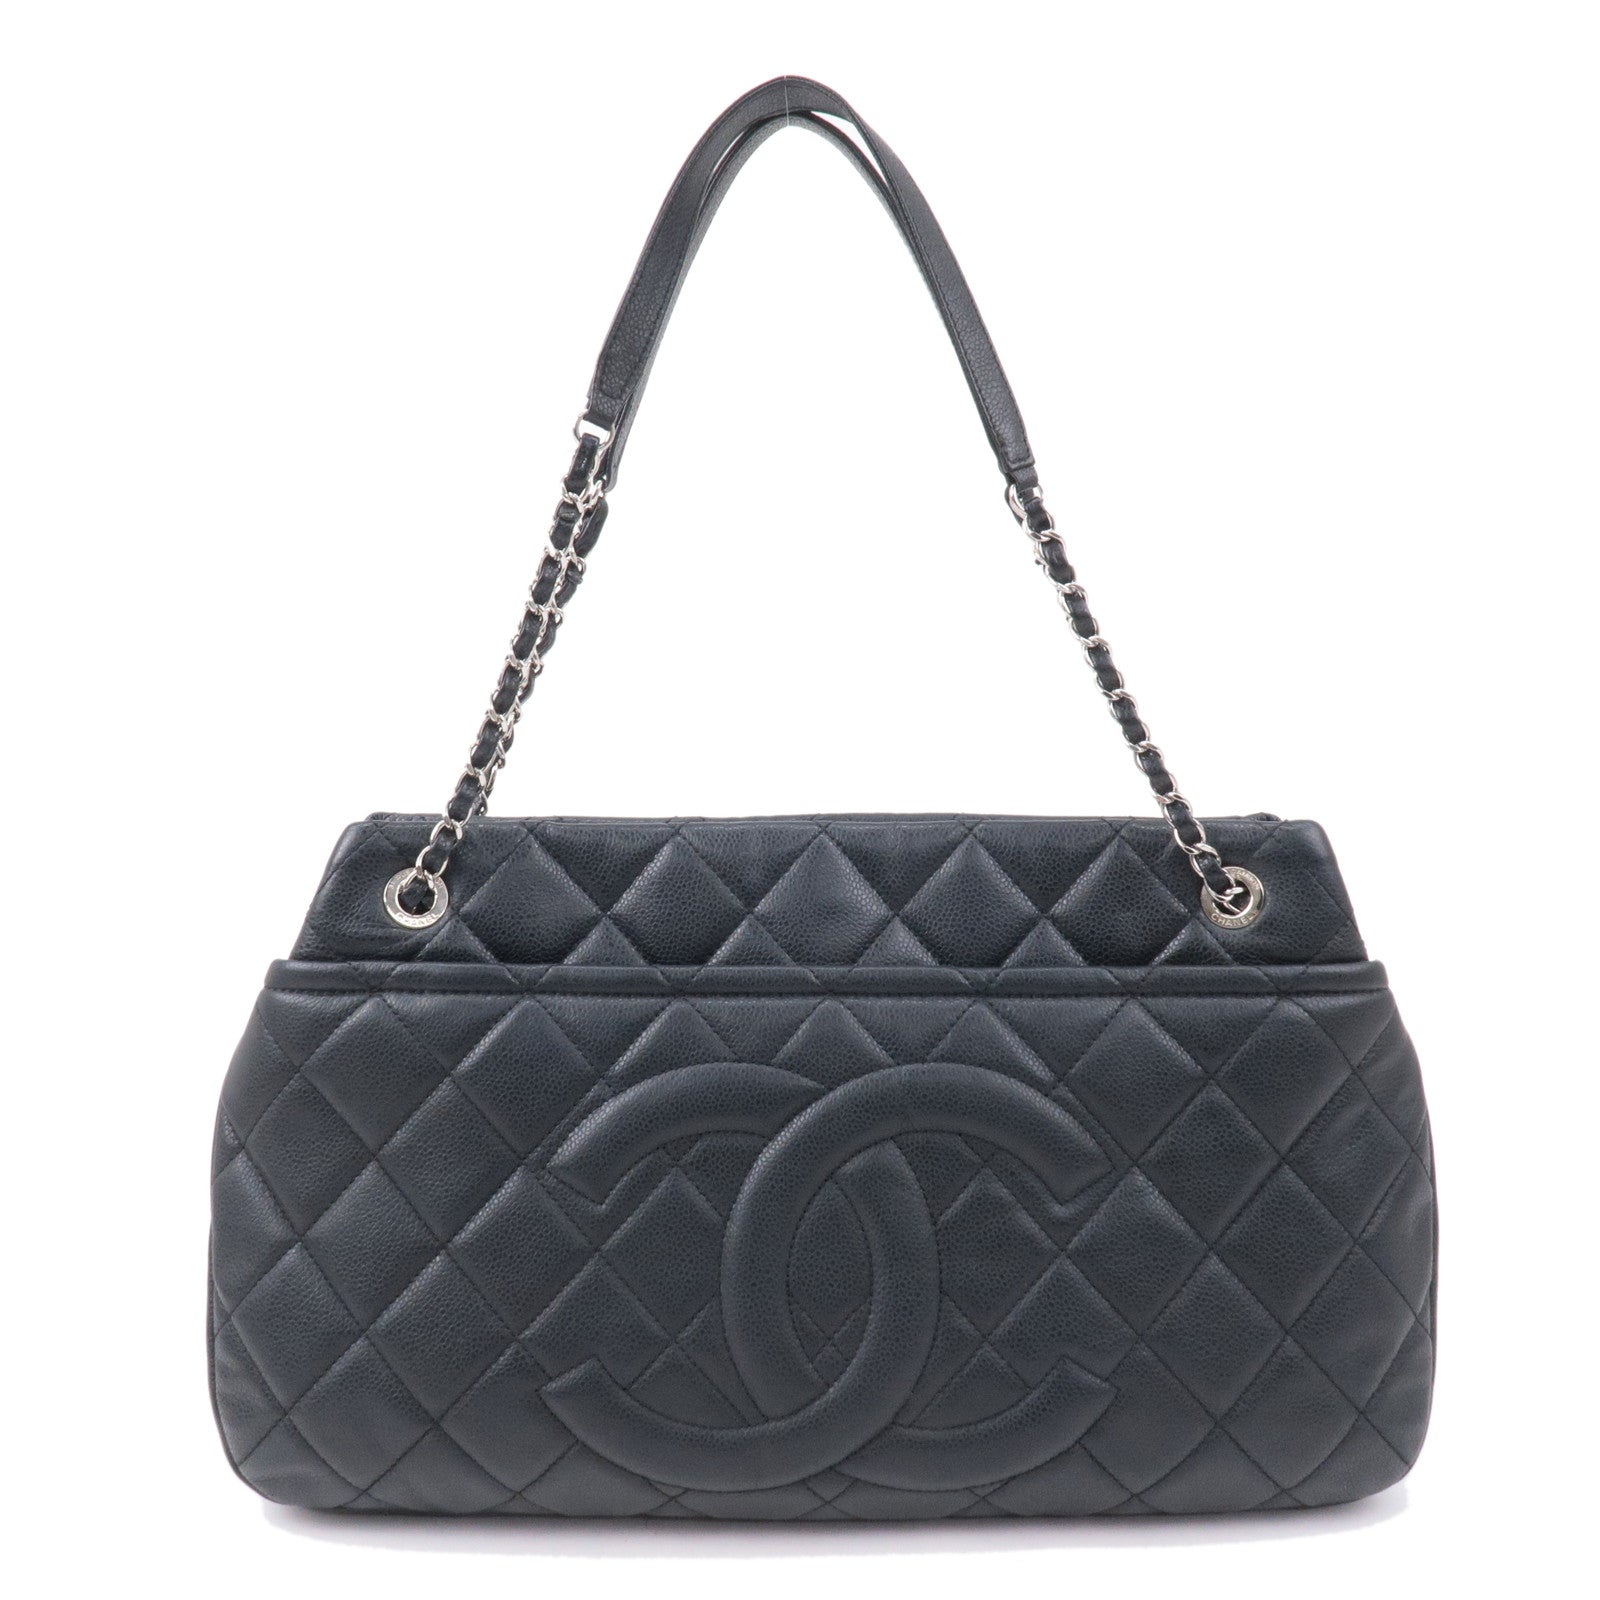 Chanel Matelasse Caviar Skin Chain Tote Bag